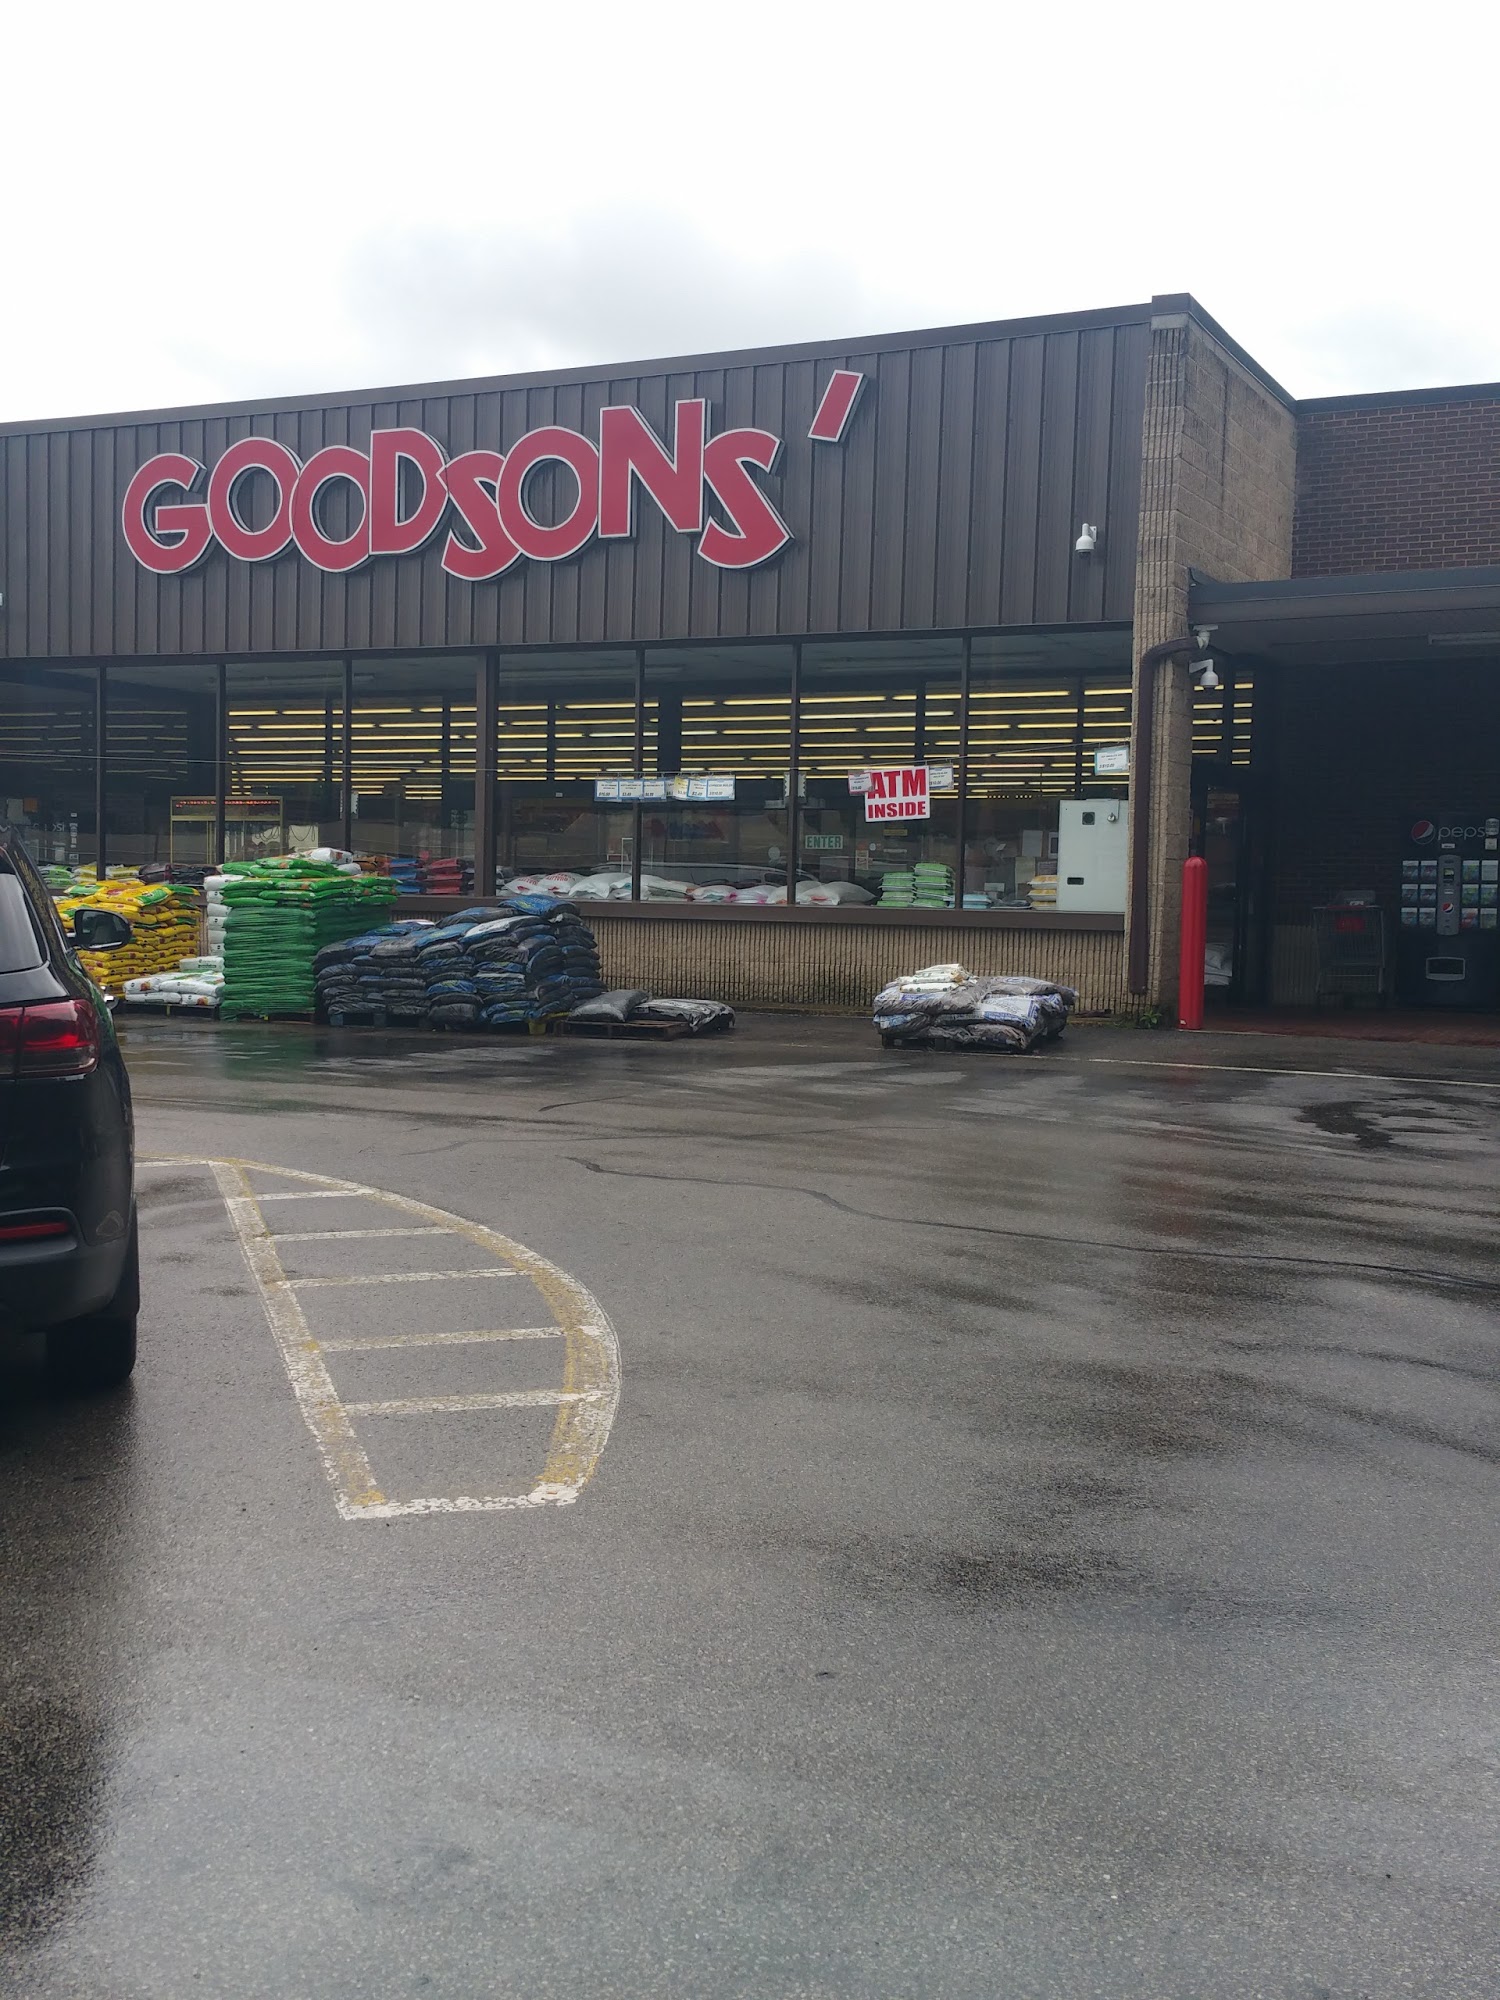 Goodson's Supermarket